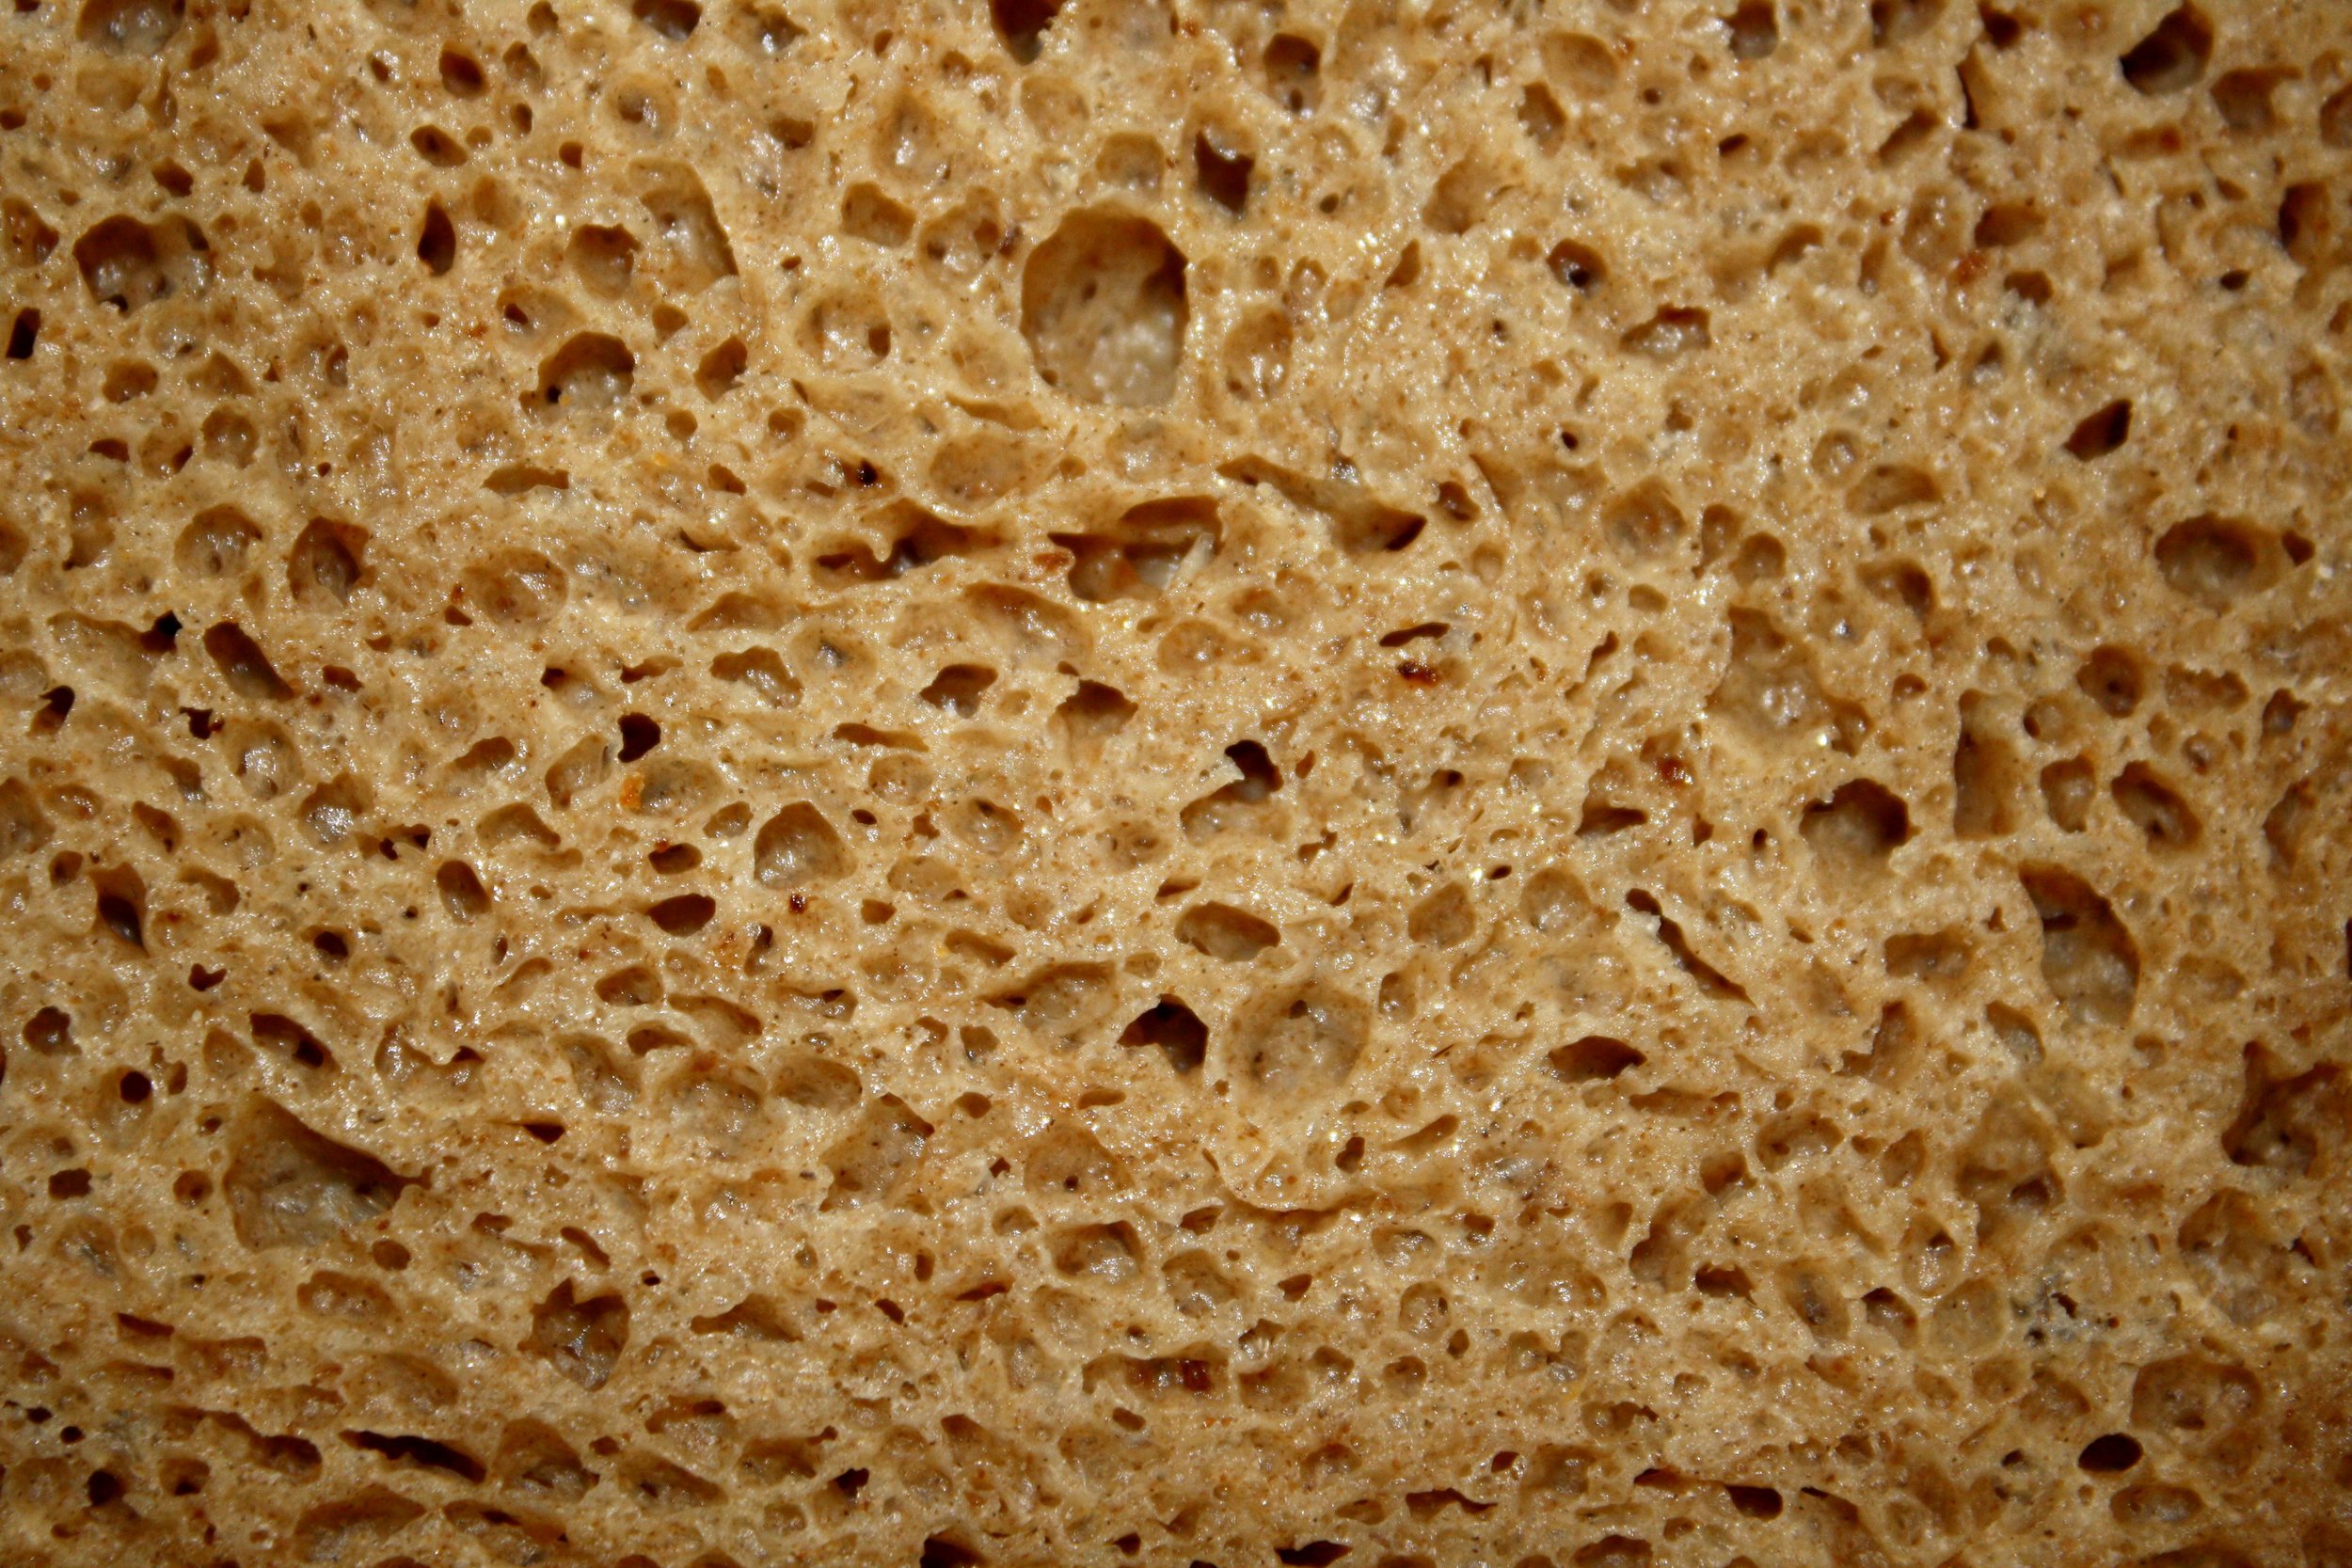 brown-bread-slice-close-up-texture.jpg